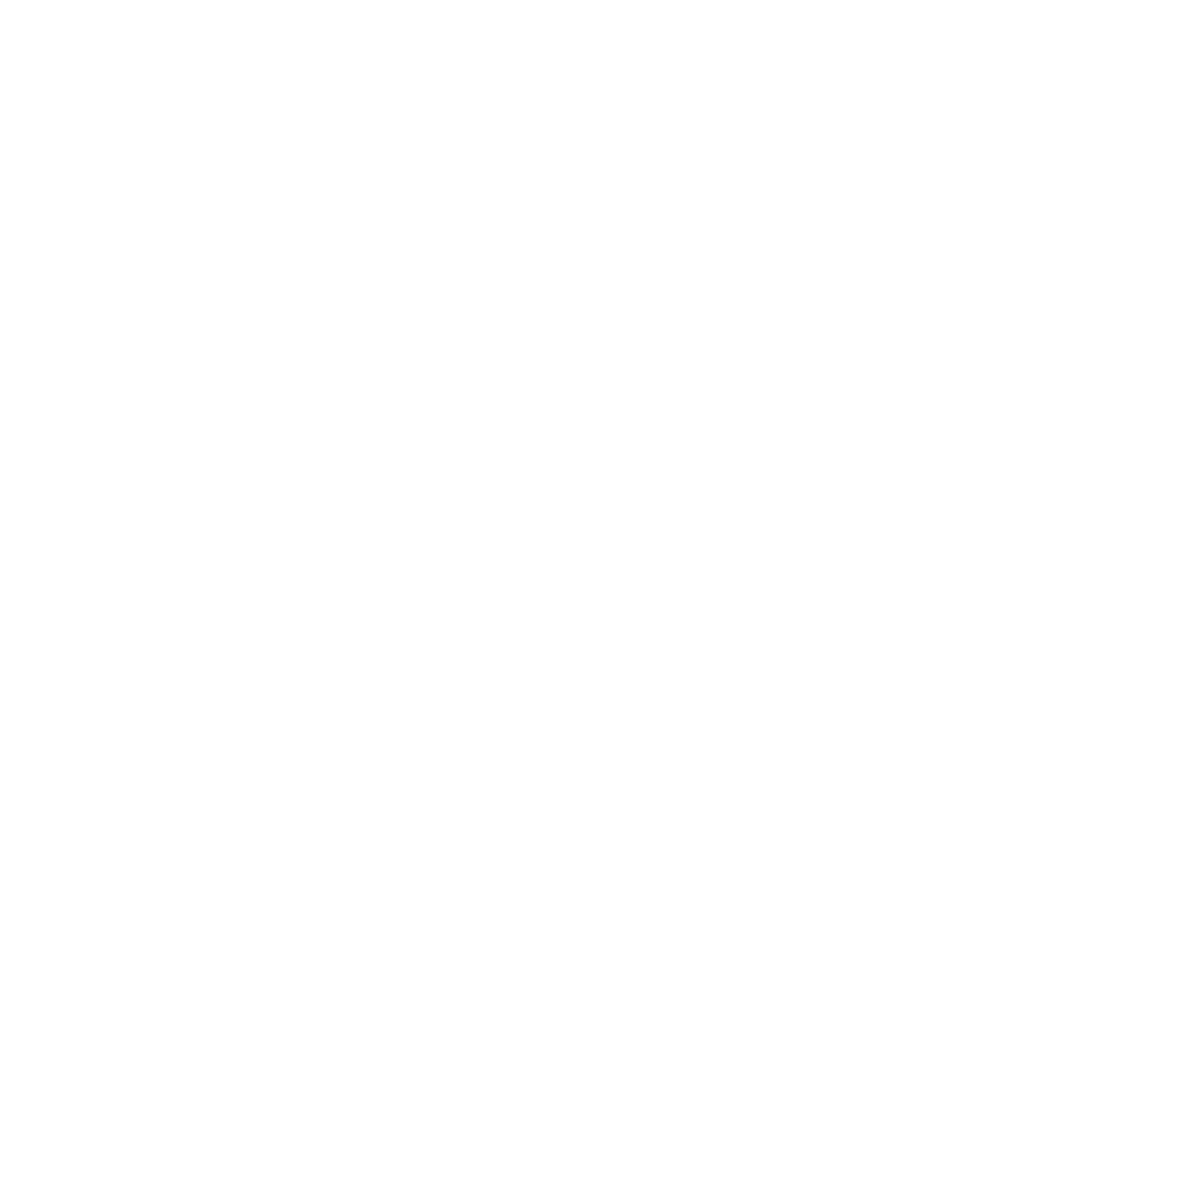 CBD Test